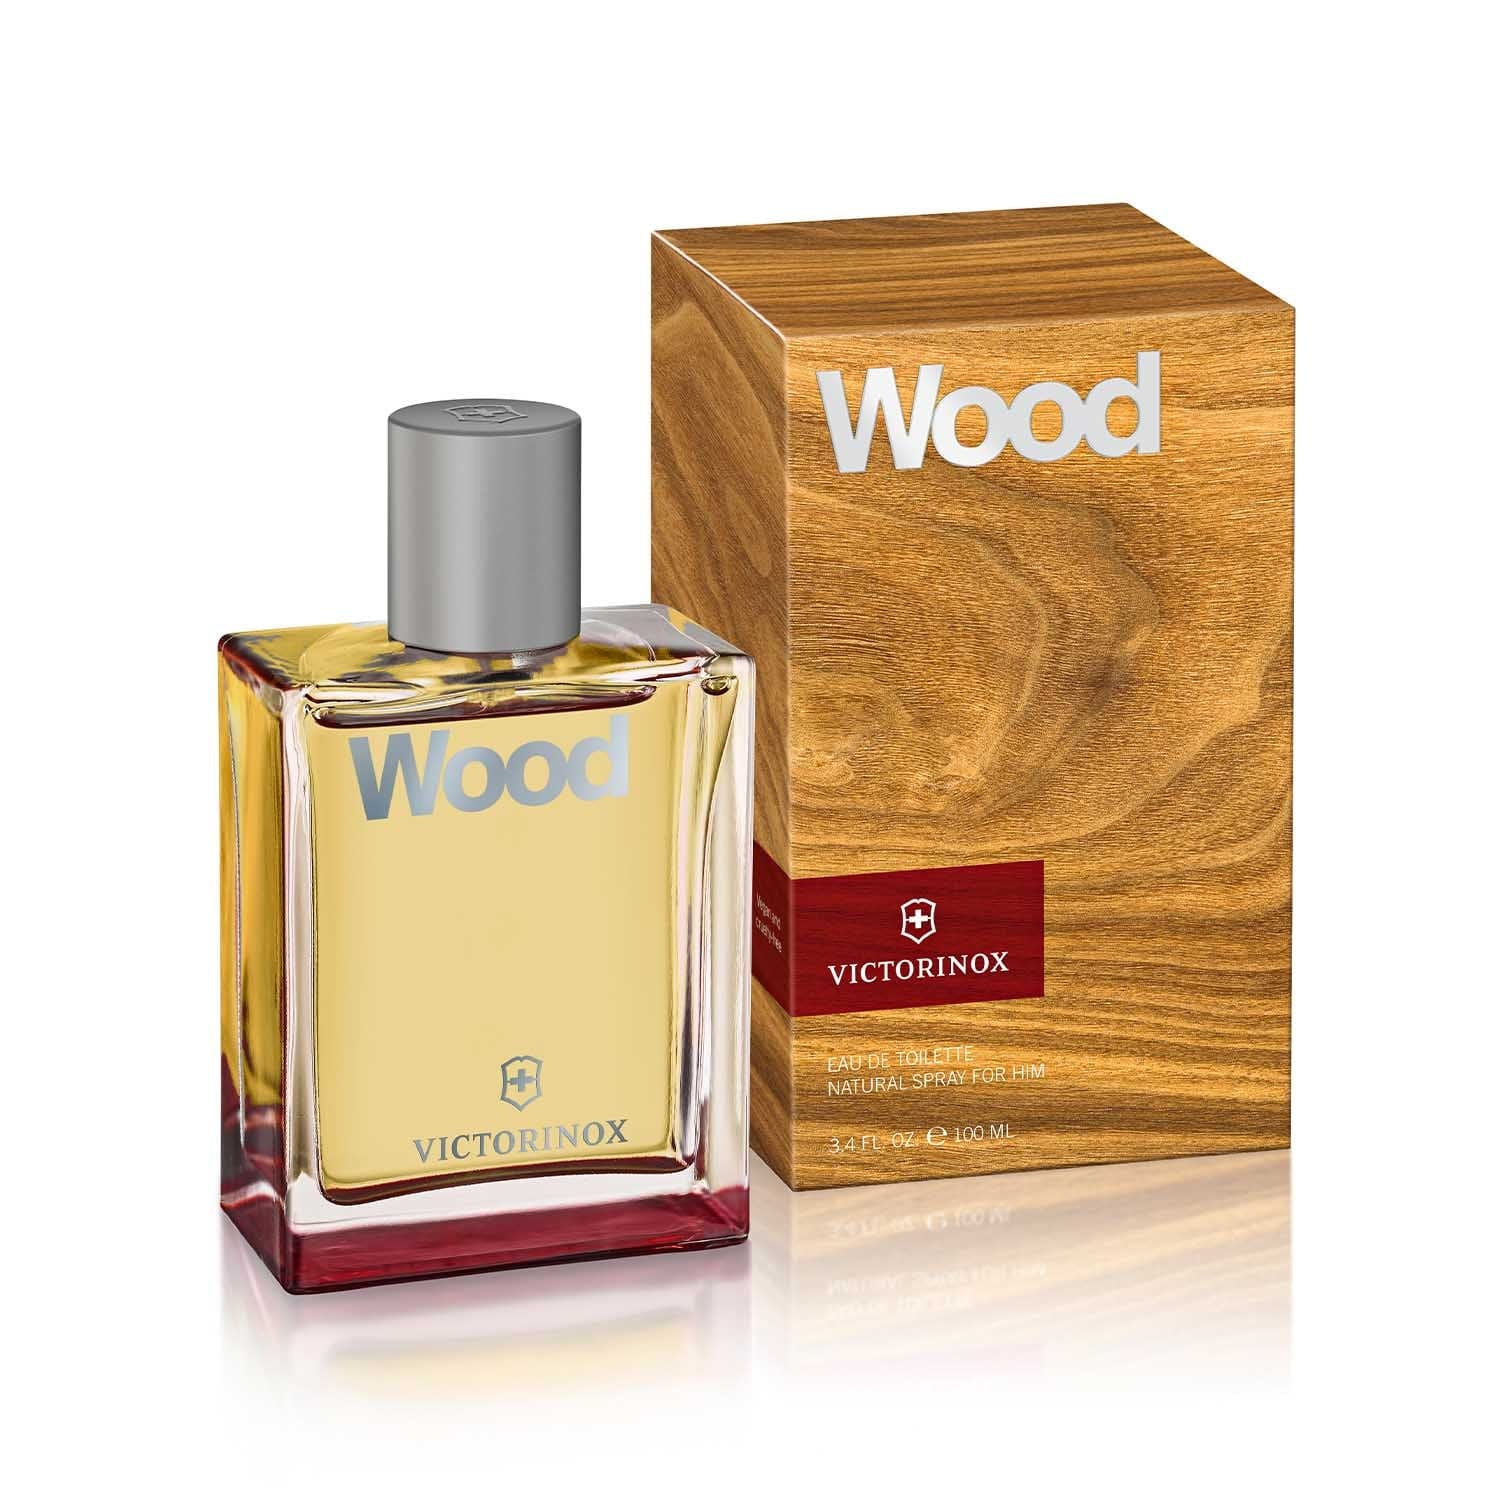 Victorinox Wood for Him EDT 100ml